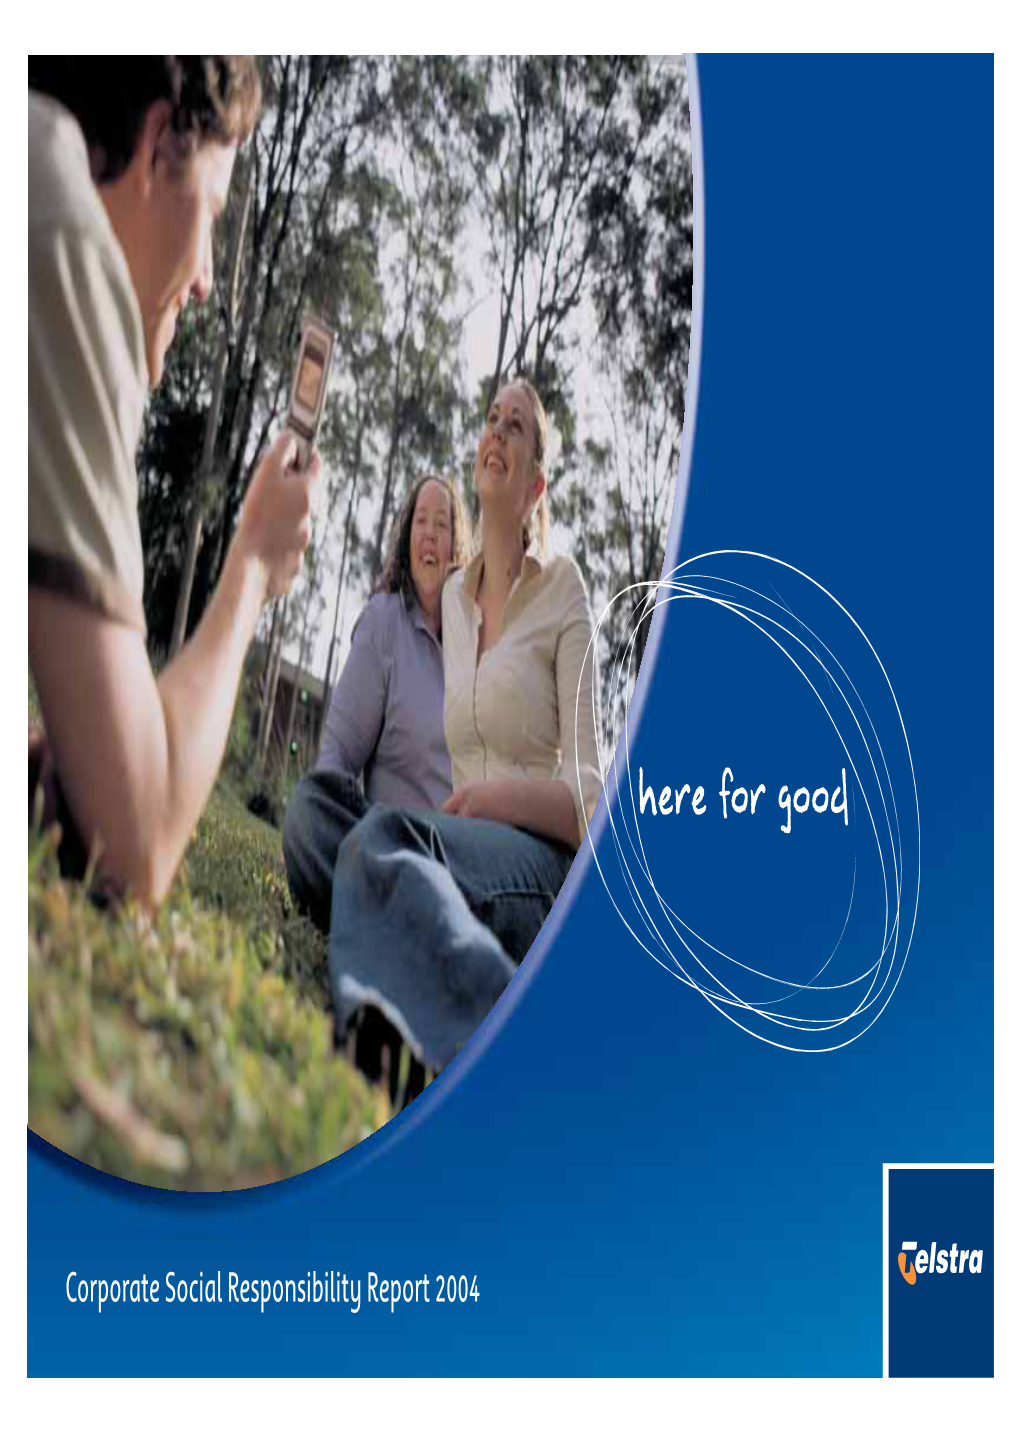 Corporate Social Responsibility Report 2004